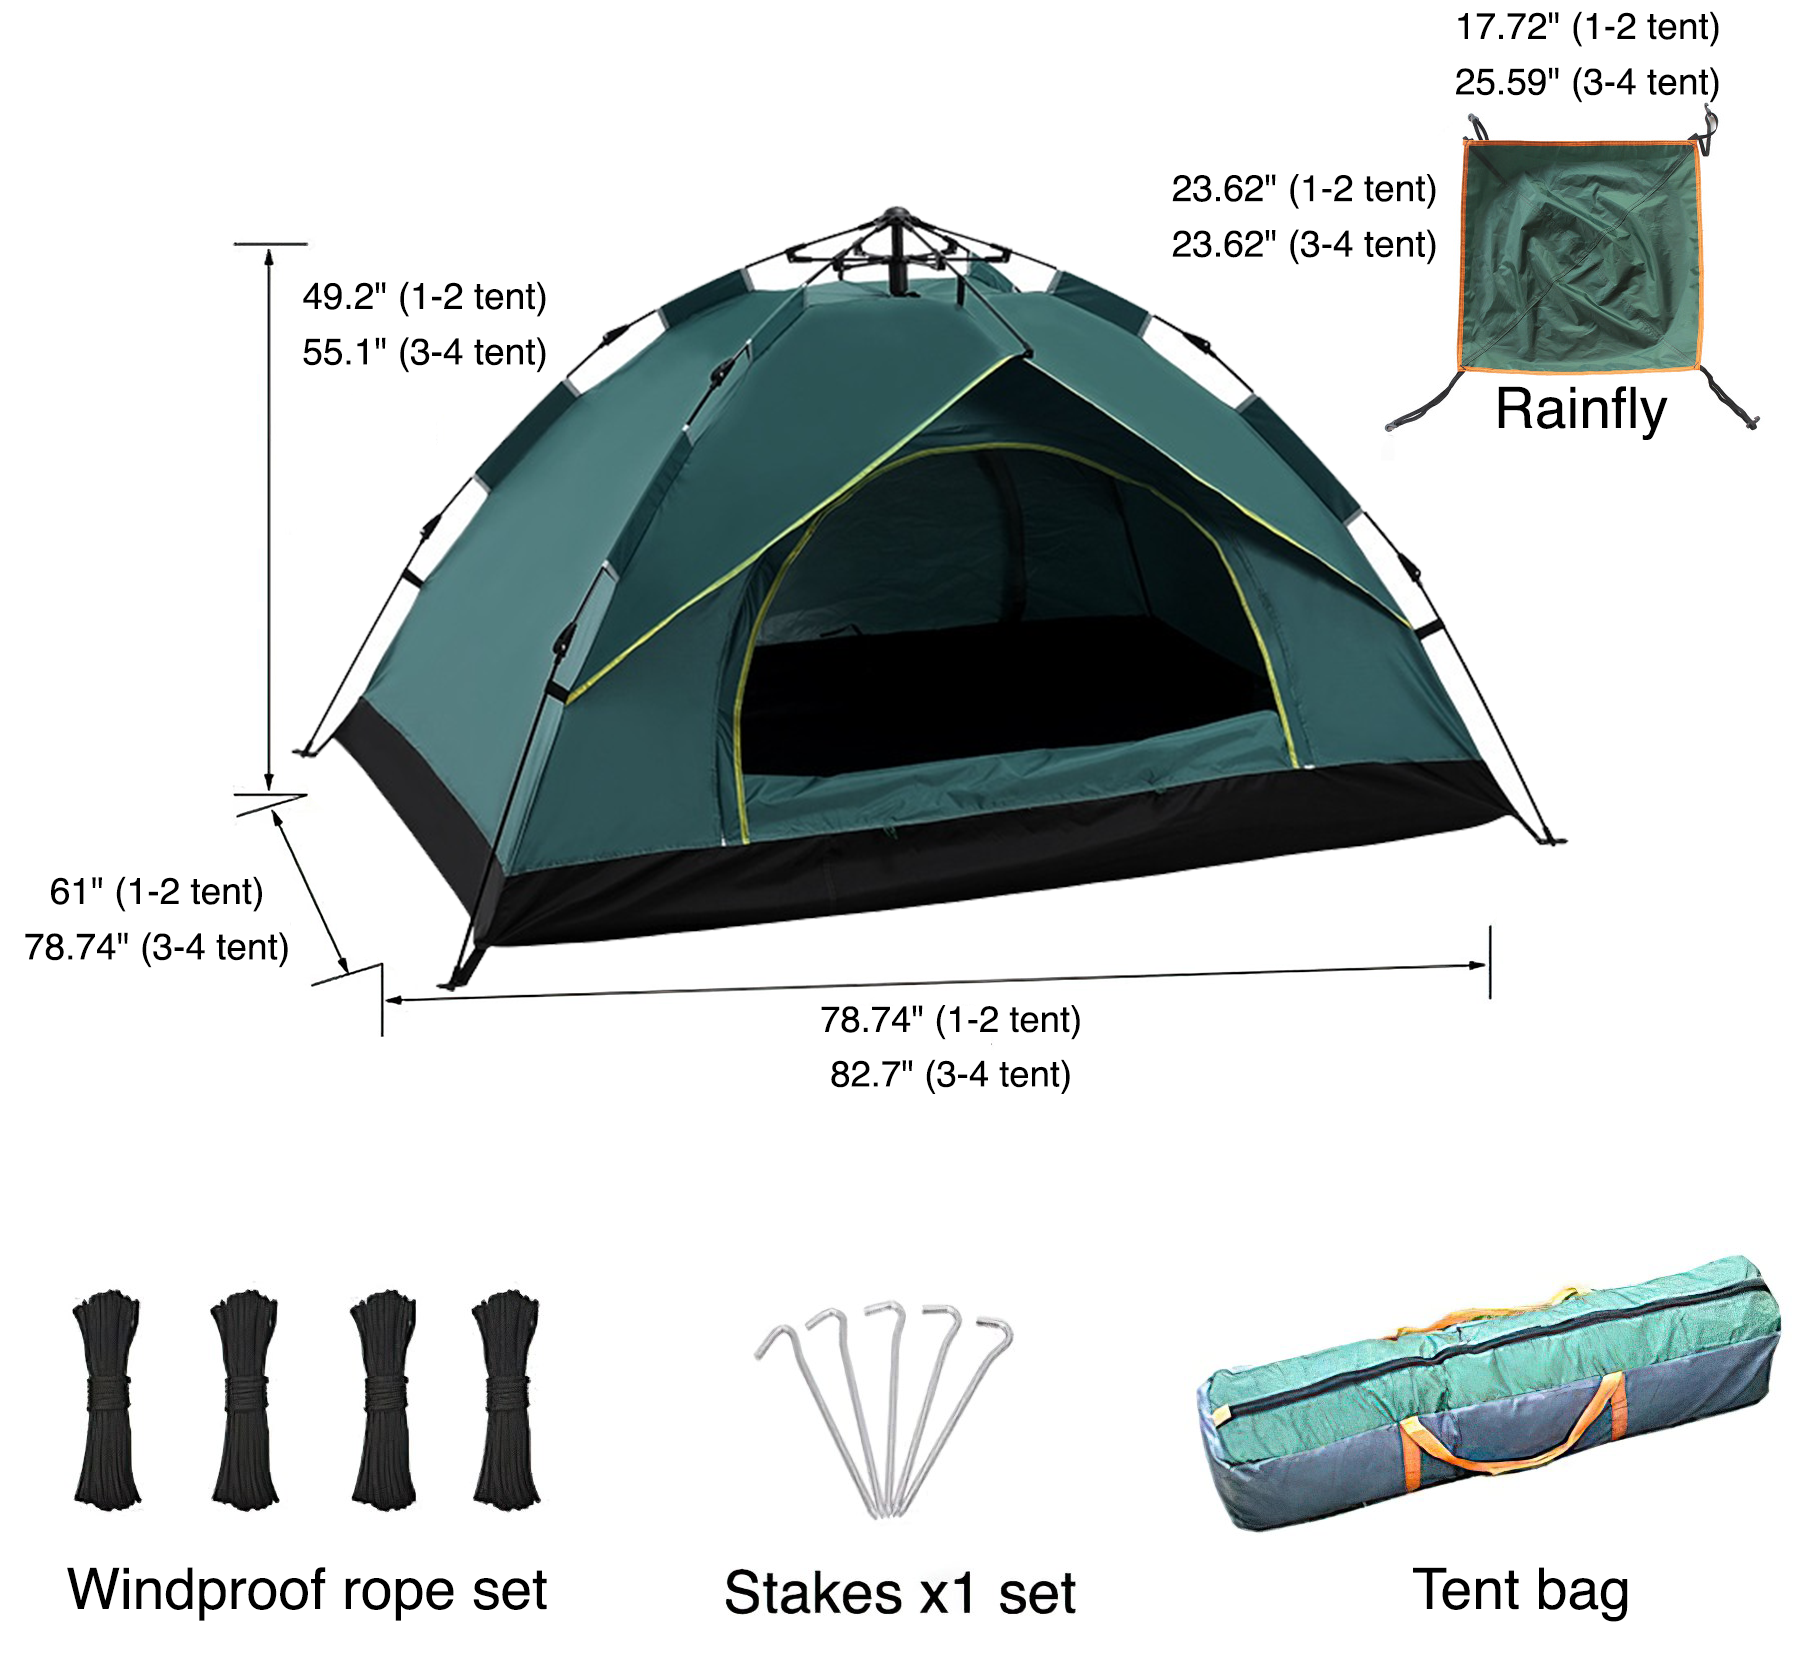 Tentas™ 10-Seconds Tent